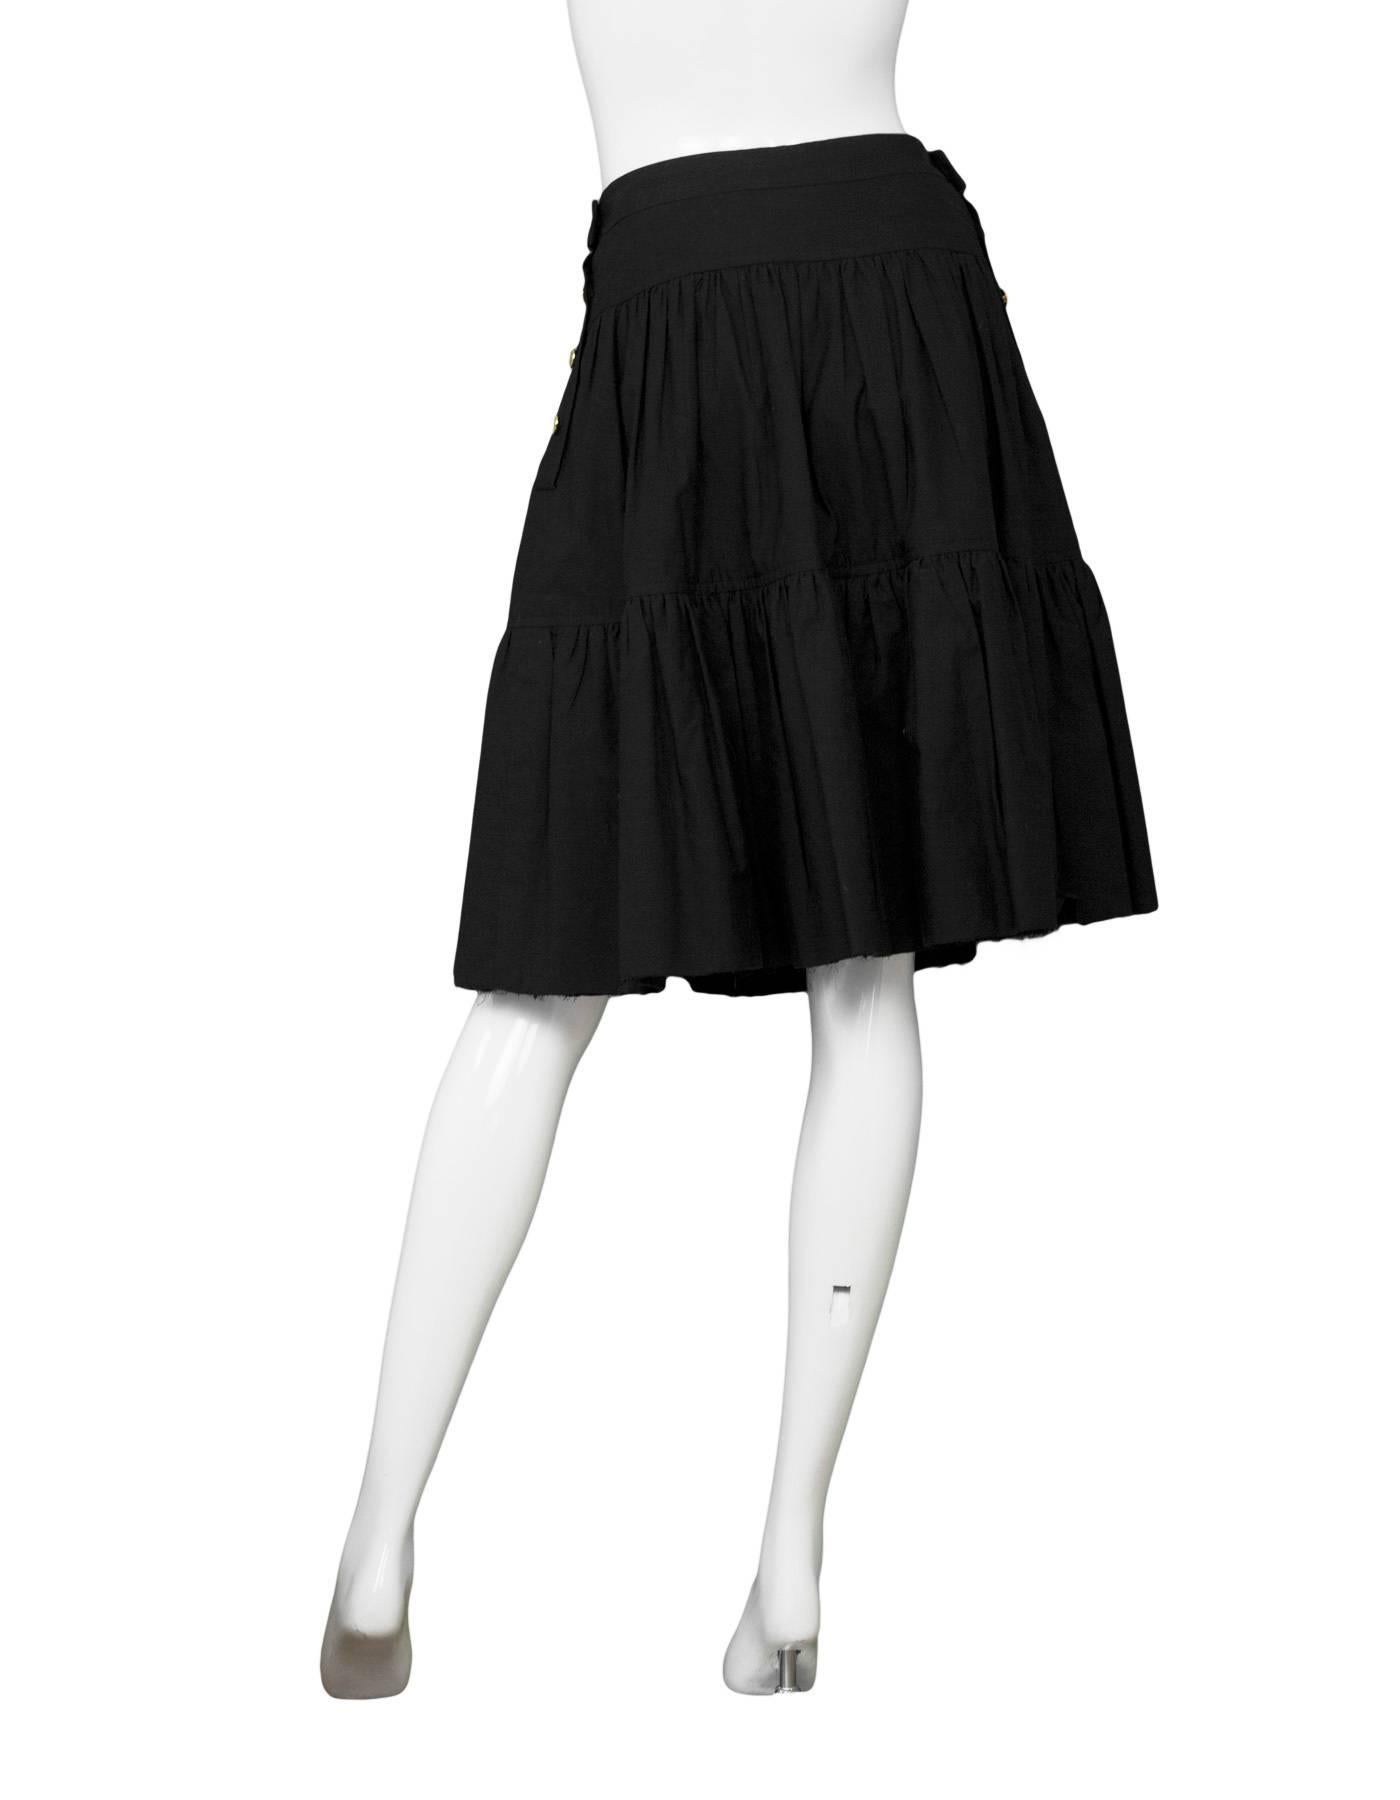 Chanel Black Cotton 2-Tier Skirt sz M 1